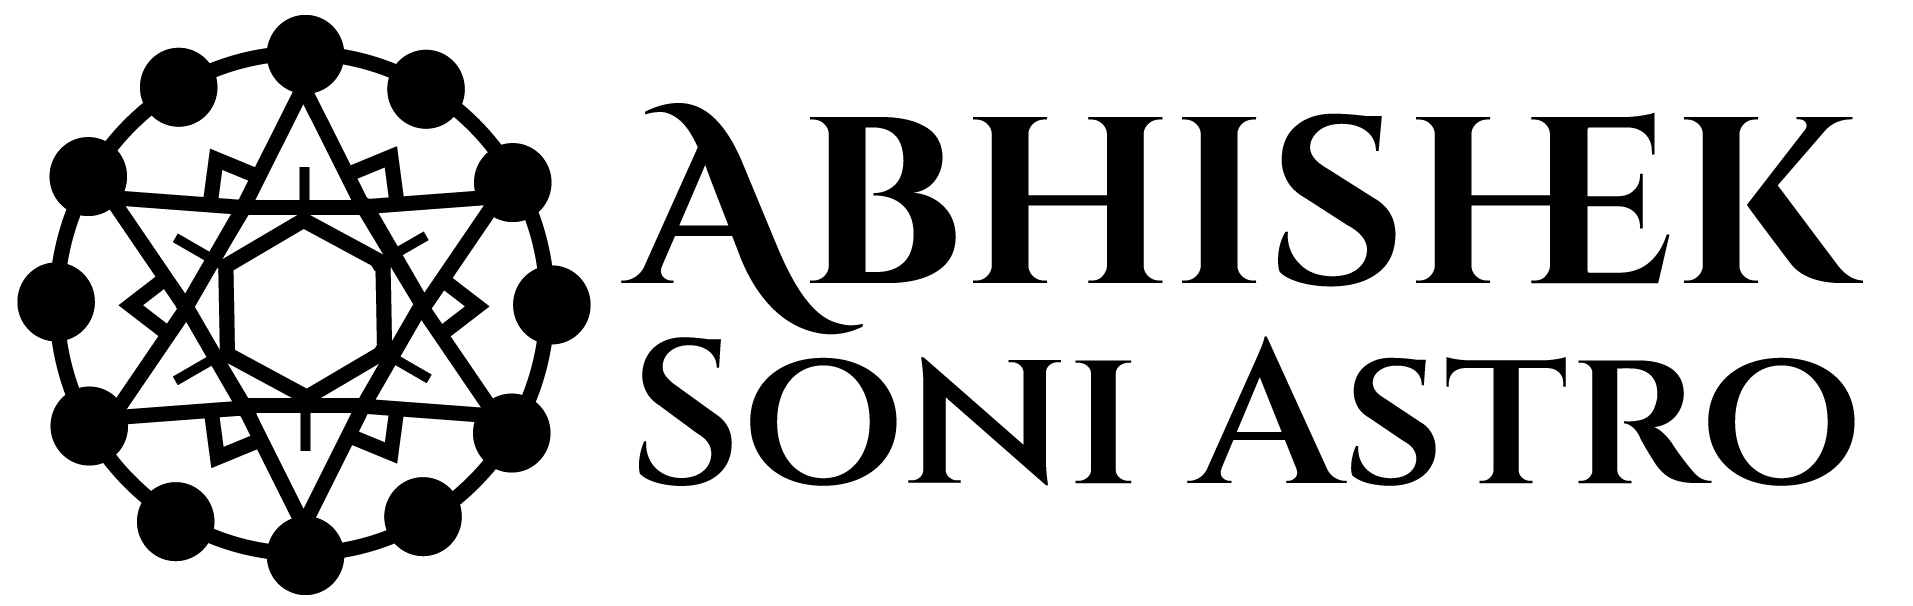 Logo Black Transparent - InfinitiDigitech - Web Development | Digital Marketing | SEO